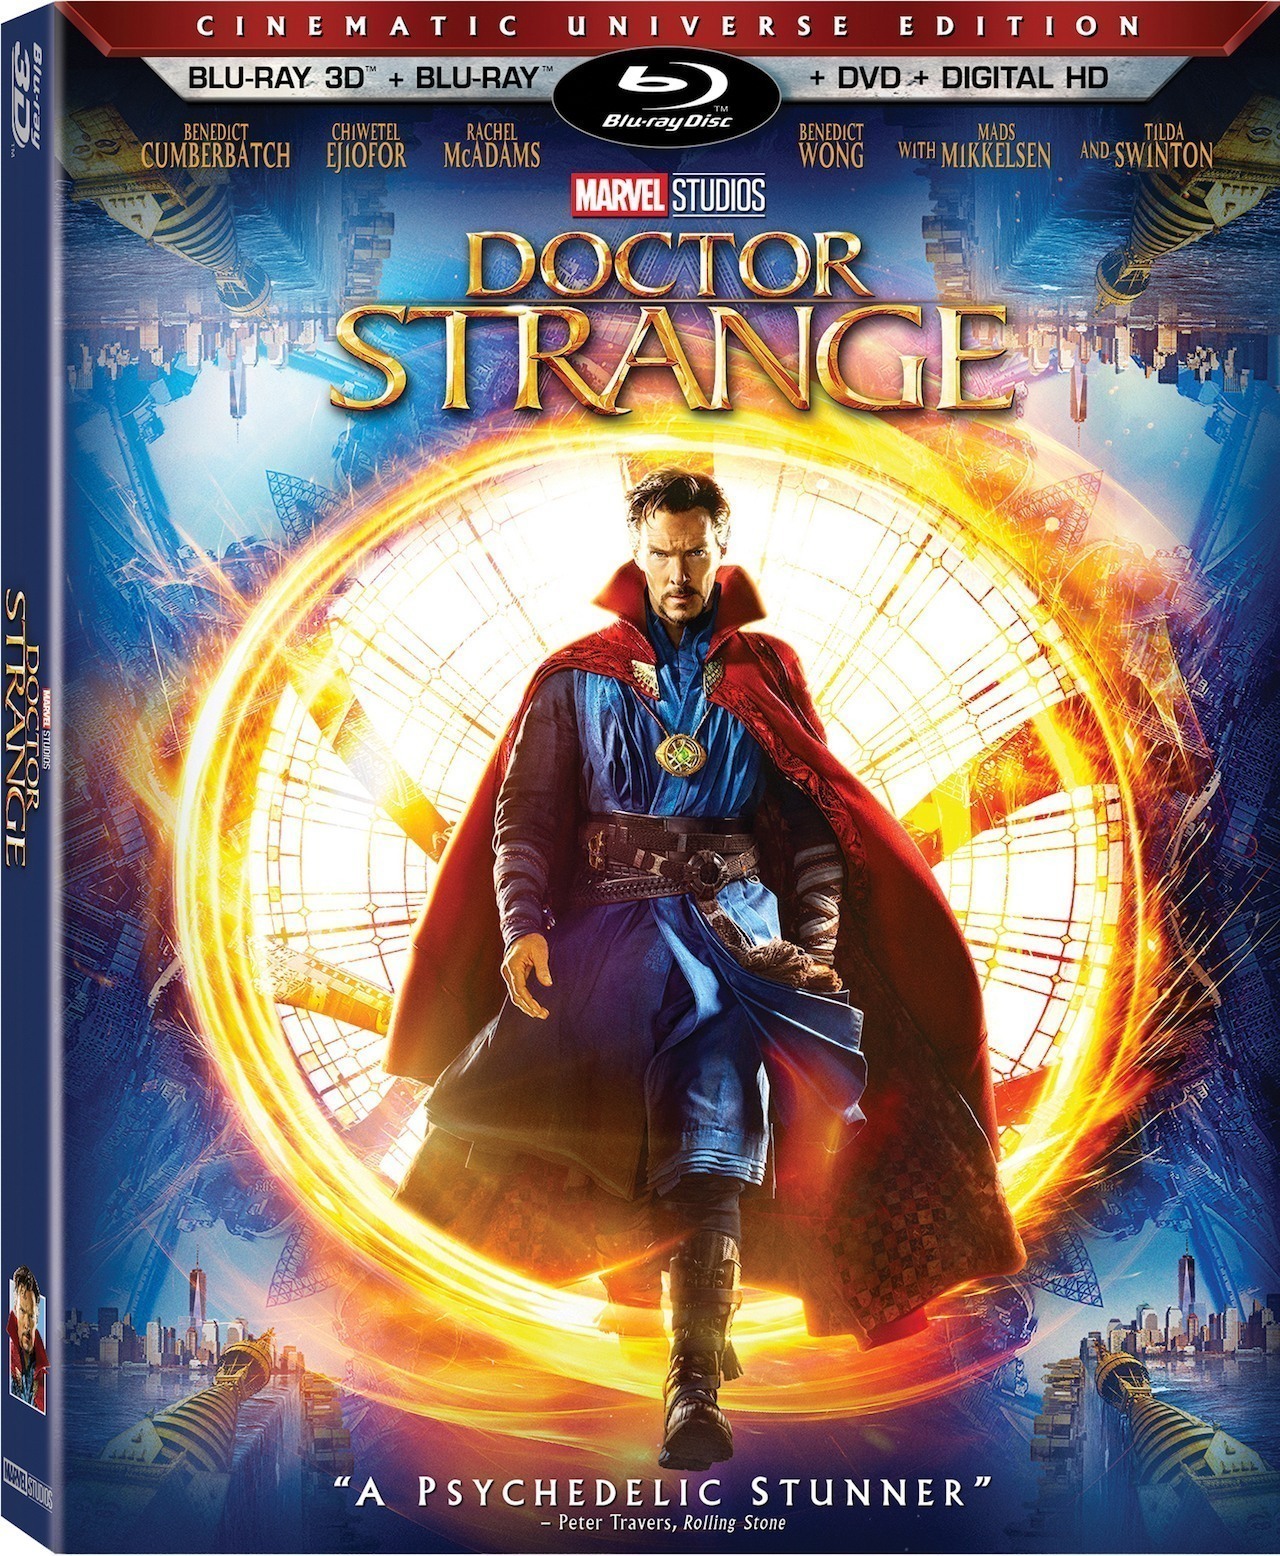 DOCTOR STRANGE -BLU RAY 3D + BLU RAY + DVD -